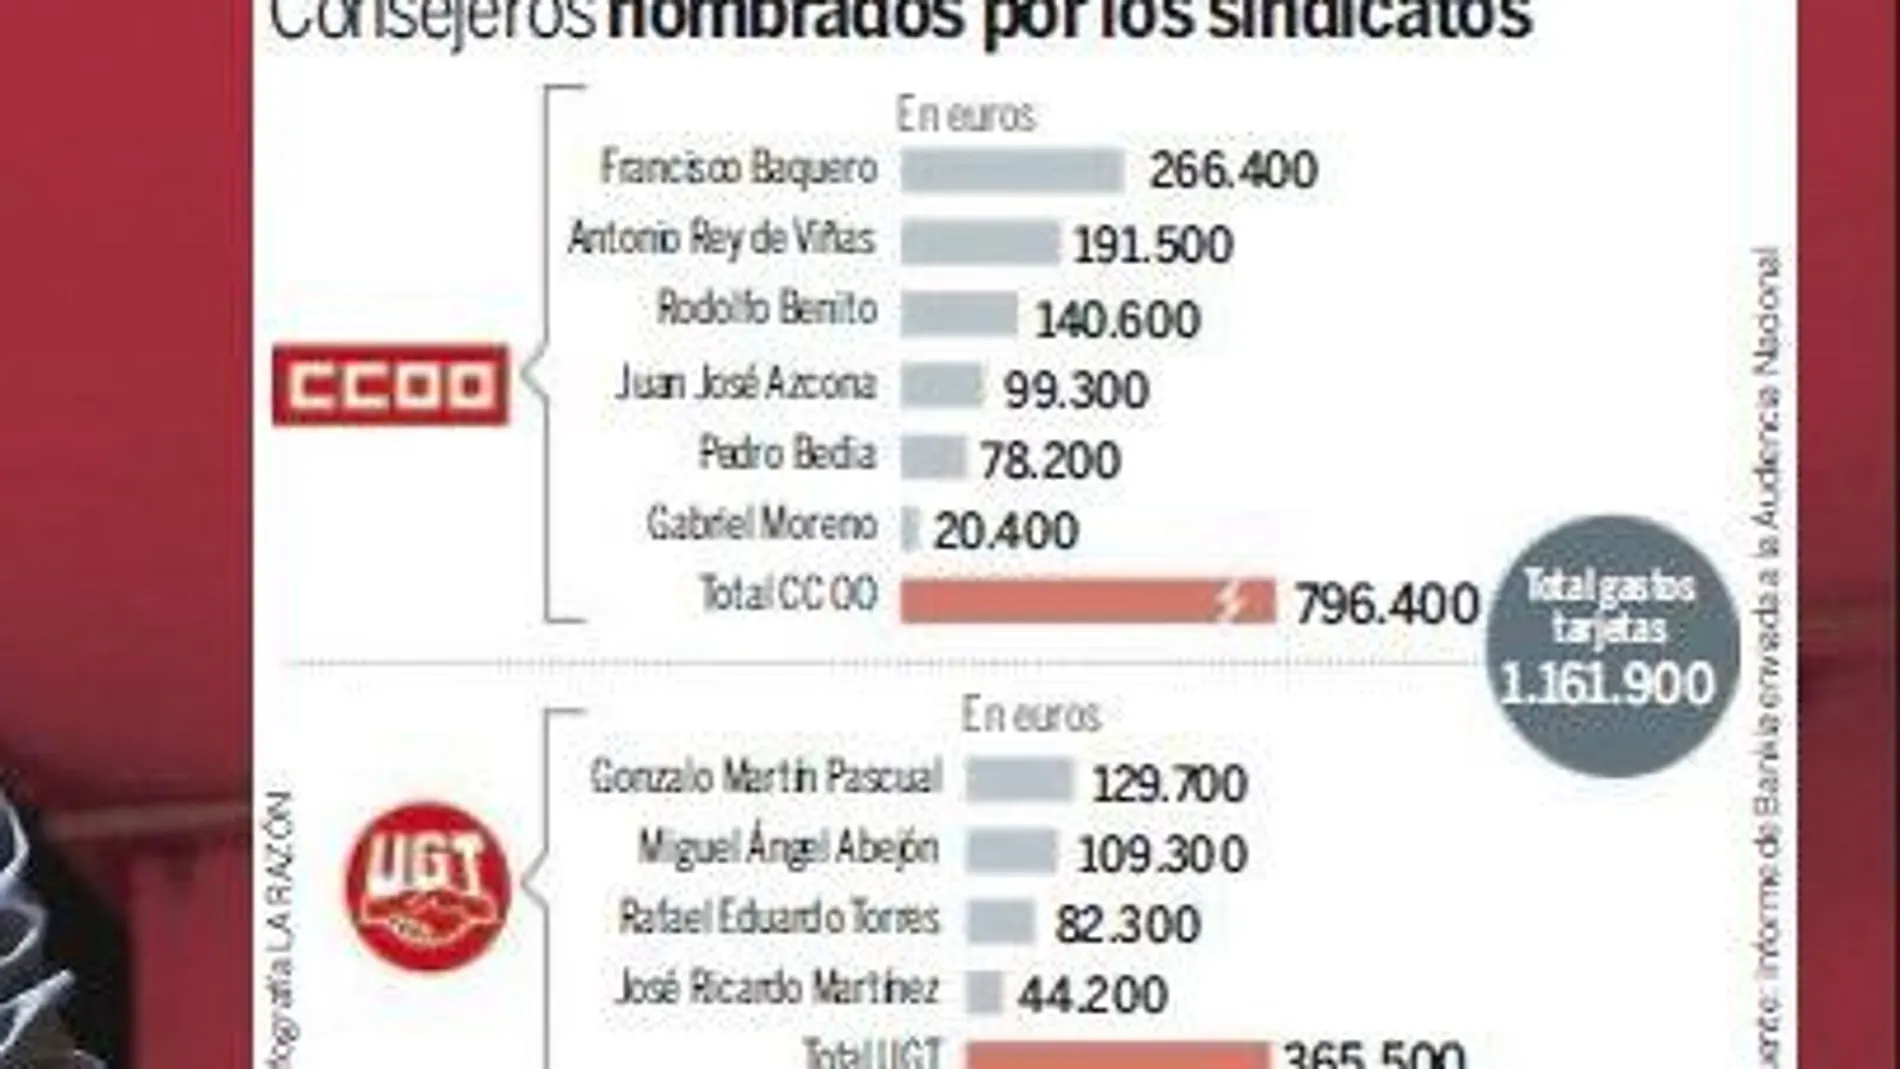 Diez sindicalistas gastaron 1,1 millones de Caja Madrid